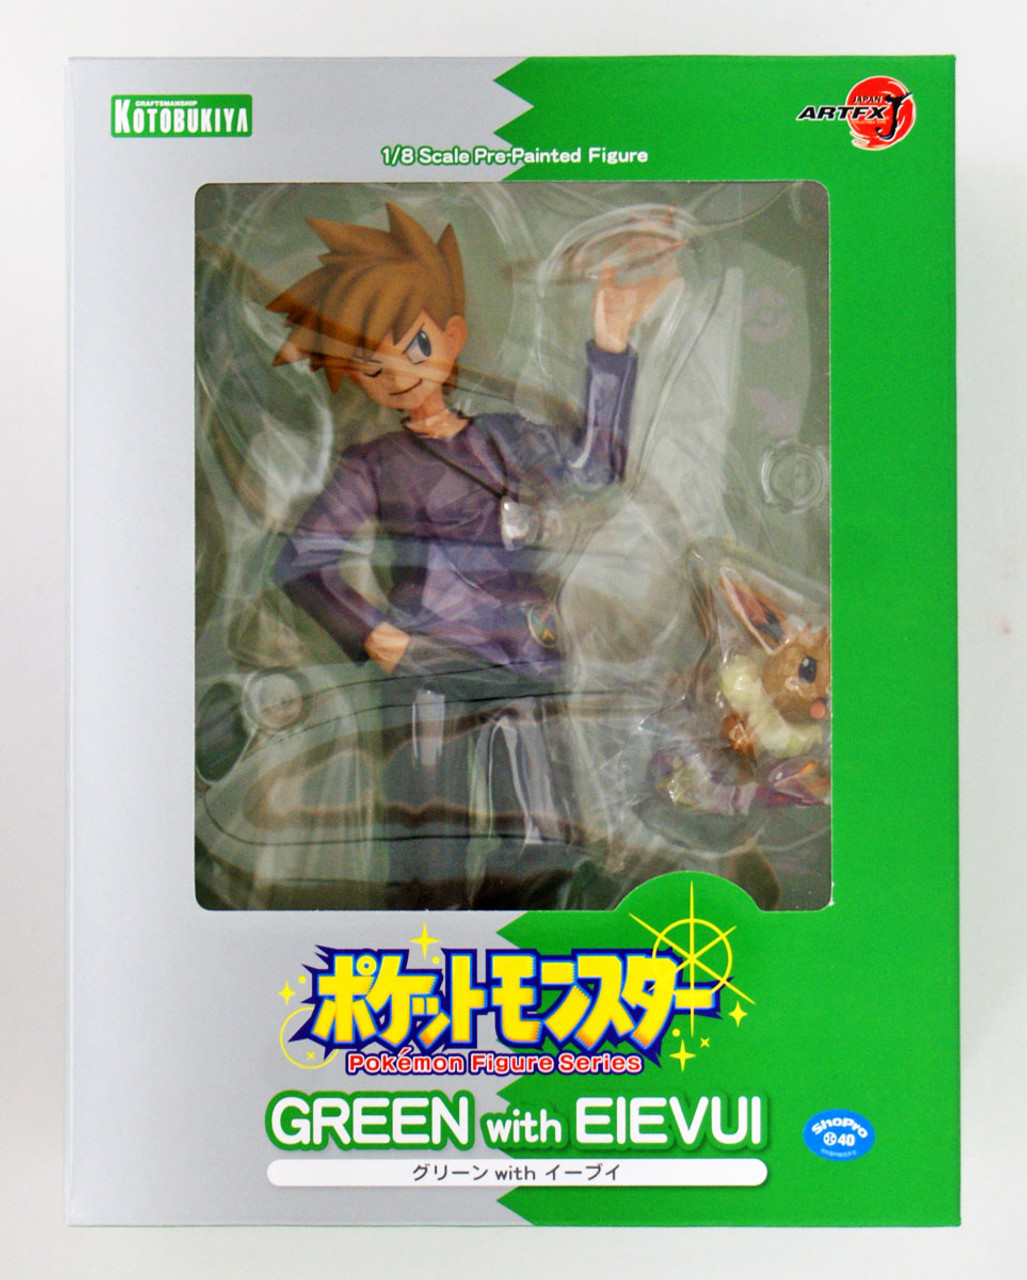 Pokemon Trainer Green with Eevee Kotobukiya ARTFX J Figure Review